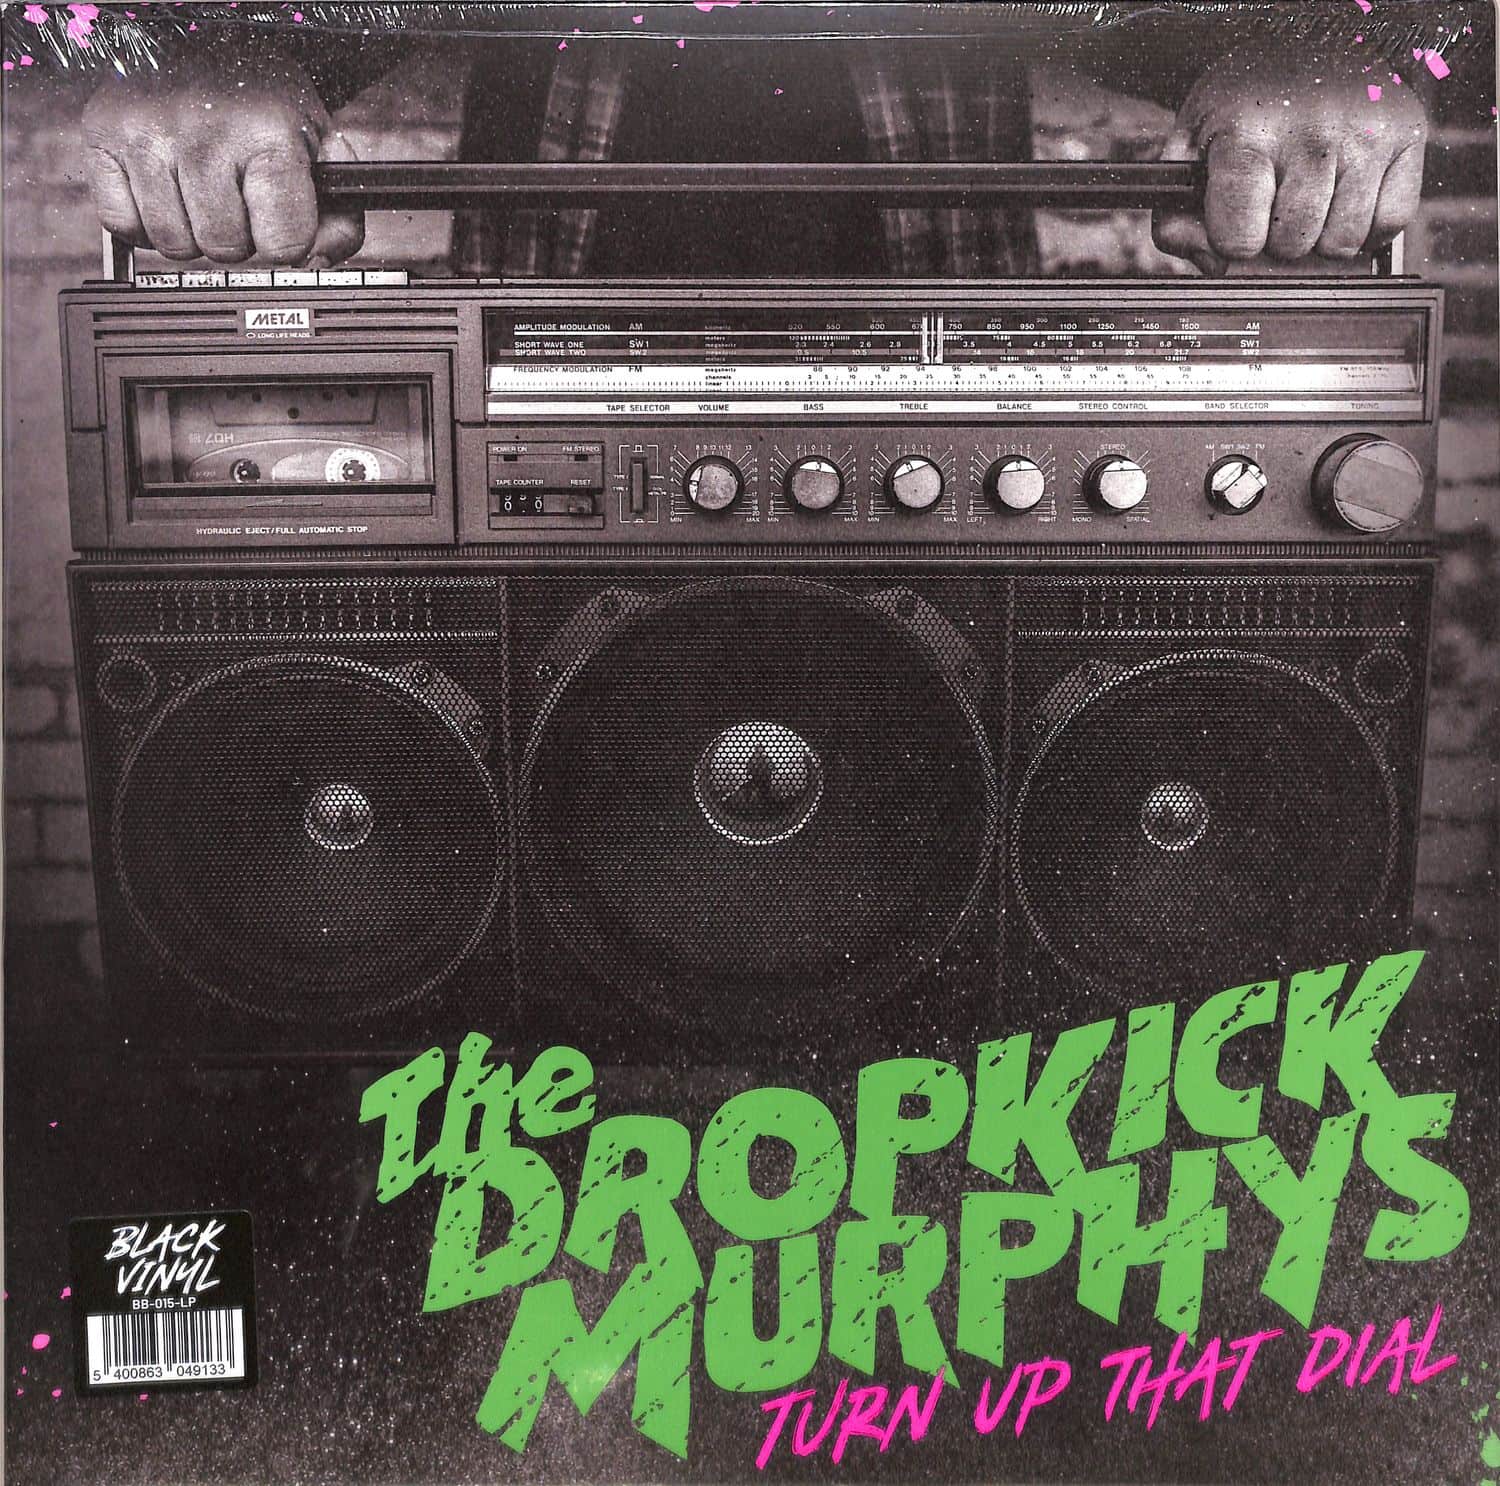 Dropkick Murphys - TURN UP THAT DIAL 